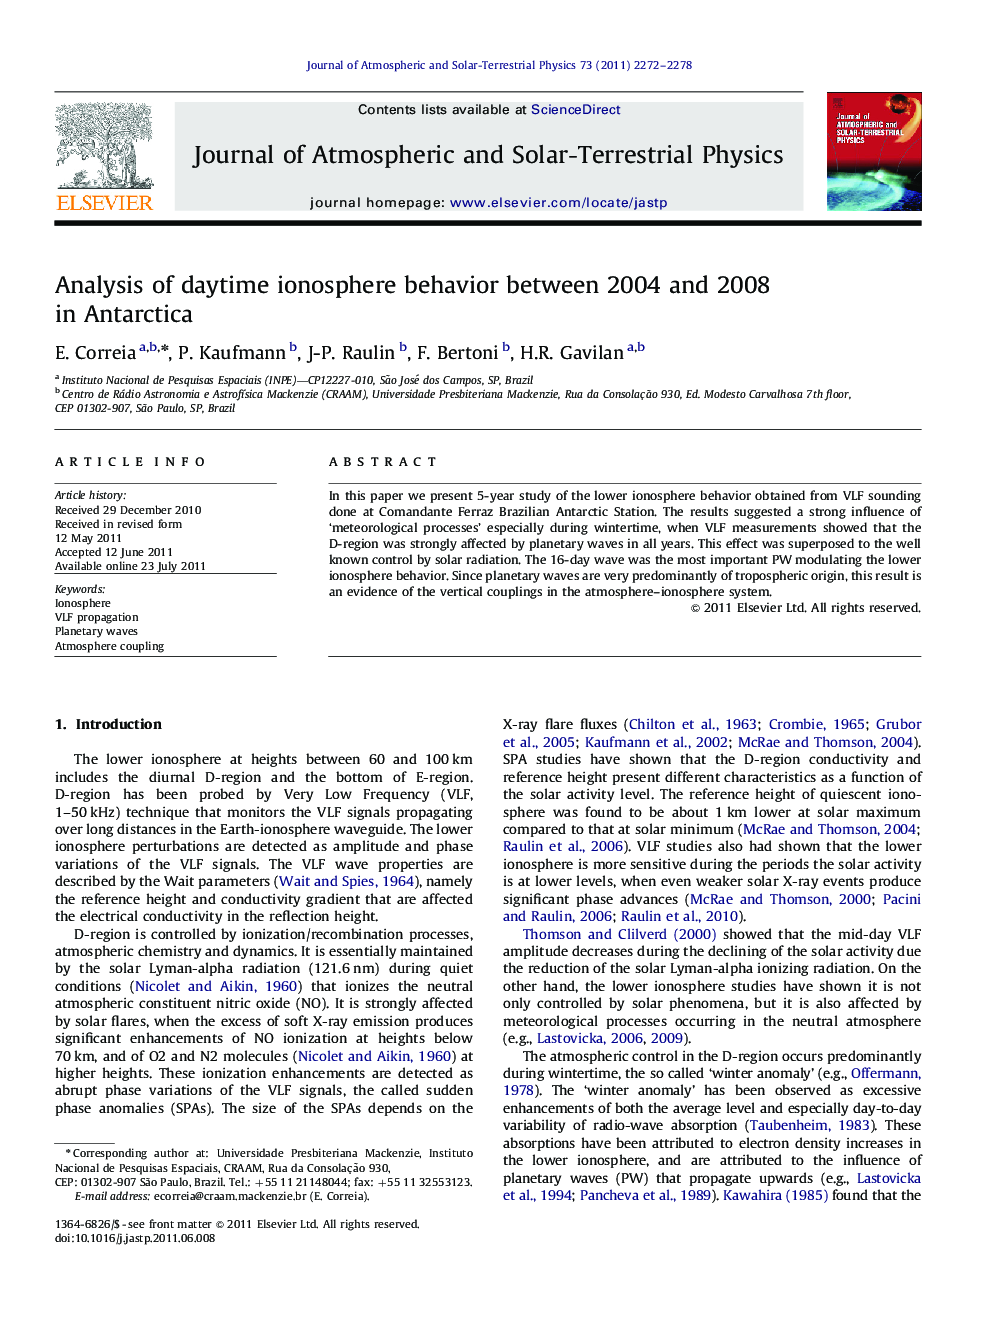 Analysis of daytime ionosphere behavior between 2004 and 2008 in Antarctica